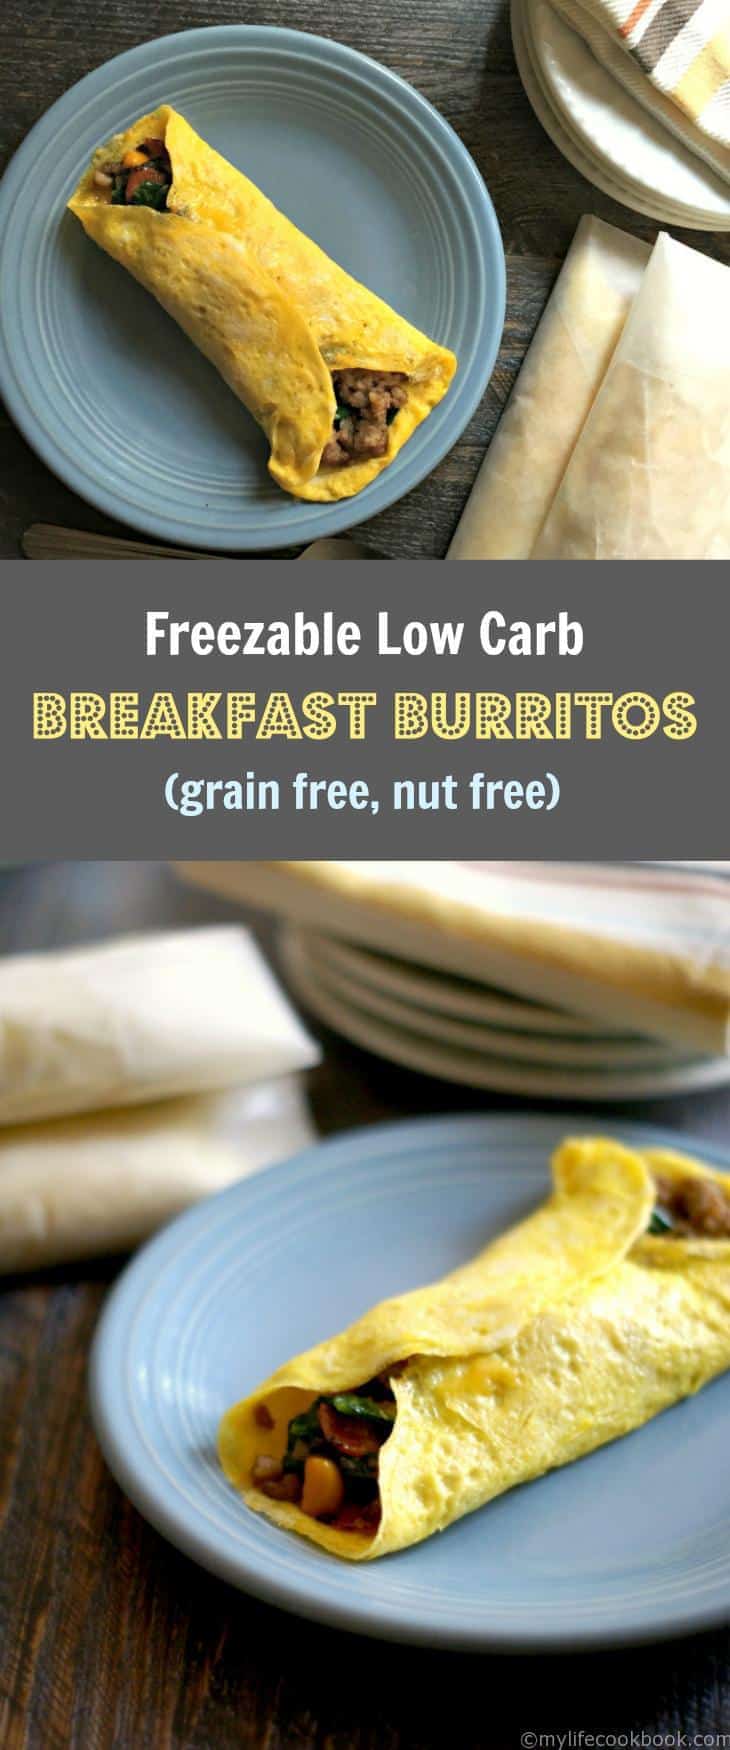 Freezable Low Carb Breakfast Burritos